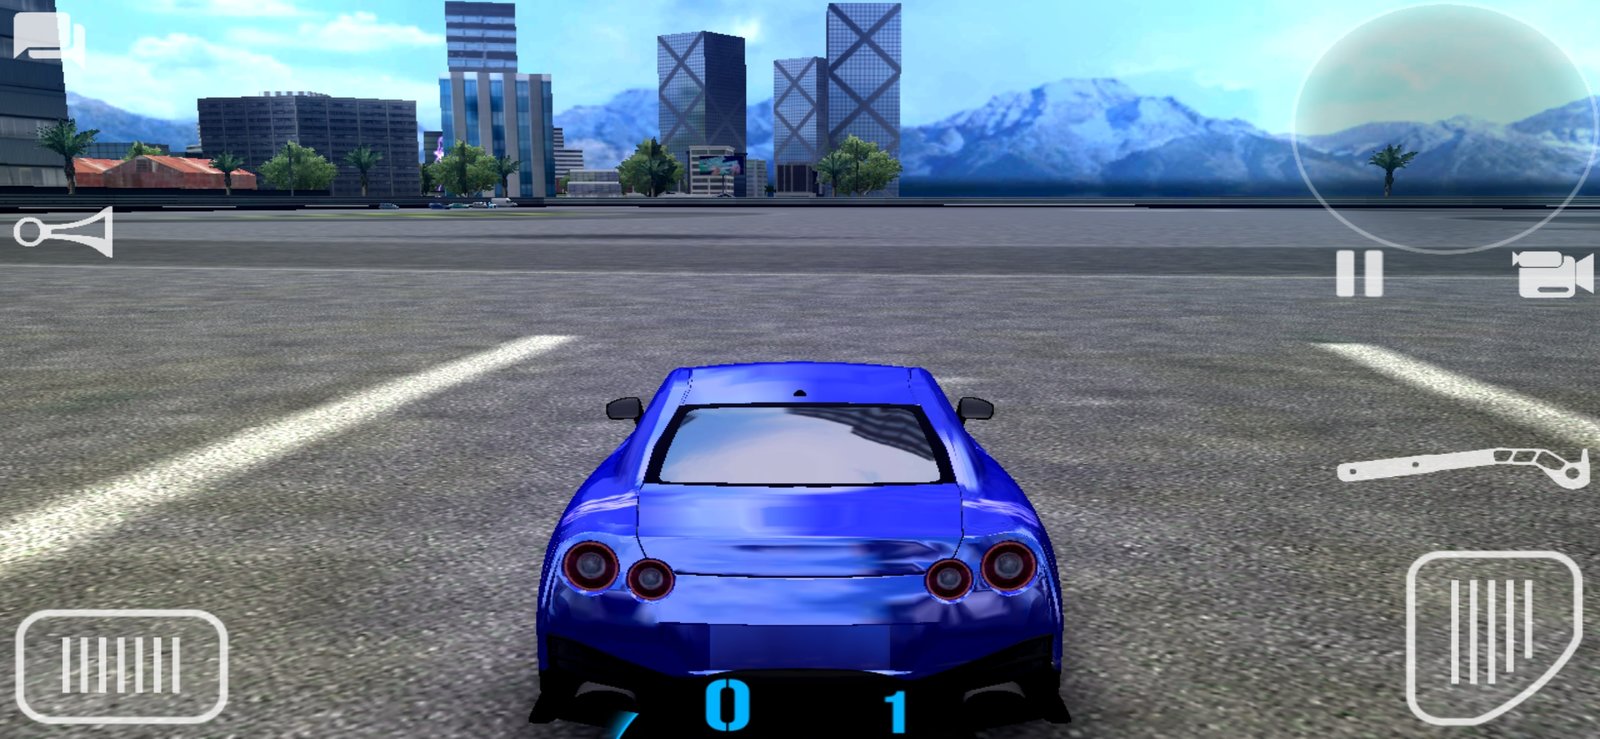 Illegal Race Tuning - Real car racing multiplayer Ver. 15 MOD APK